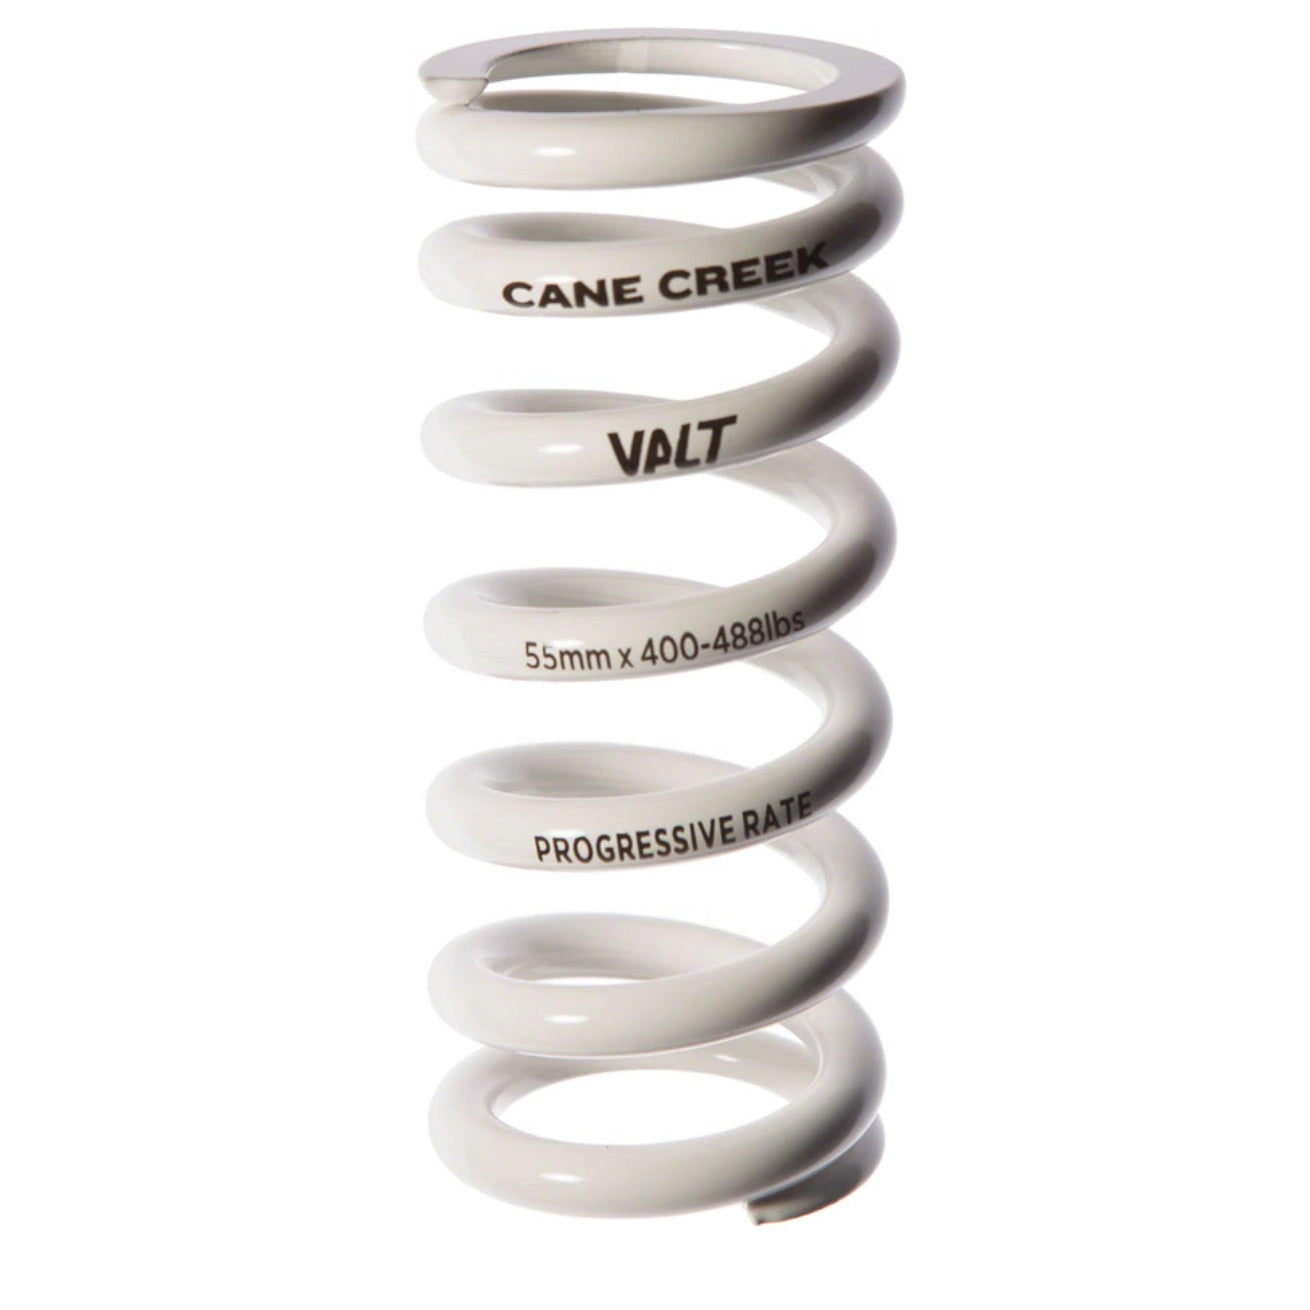 Cane Creek Progressive Rate VALT Lightweight Rear Shock Spring - 55mm x 400-488lbs White